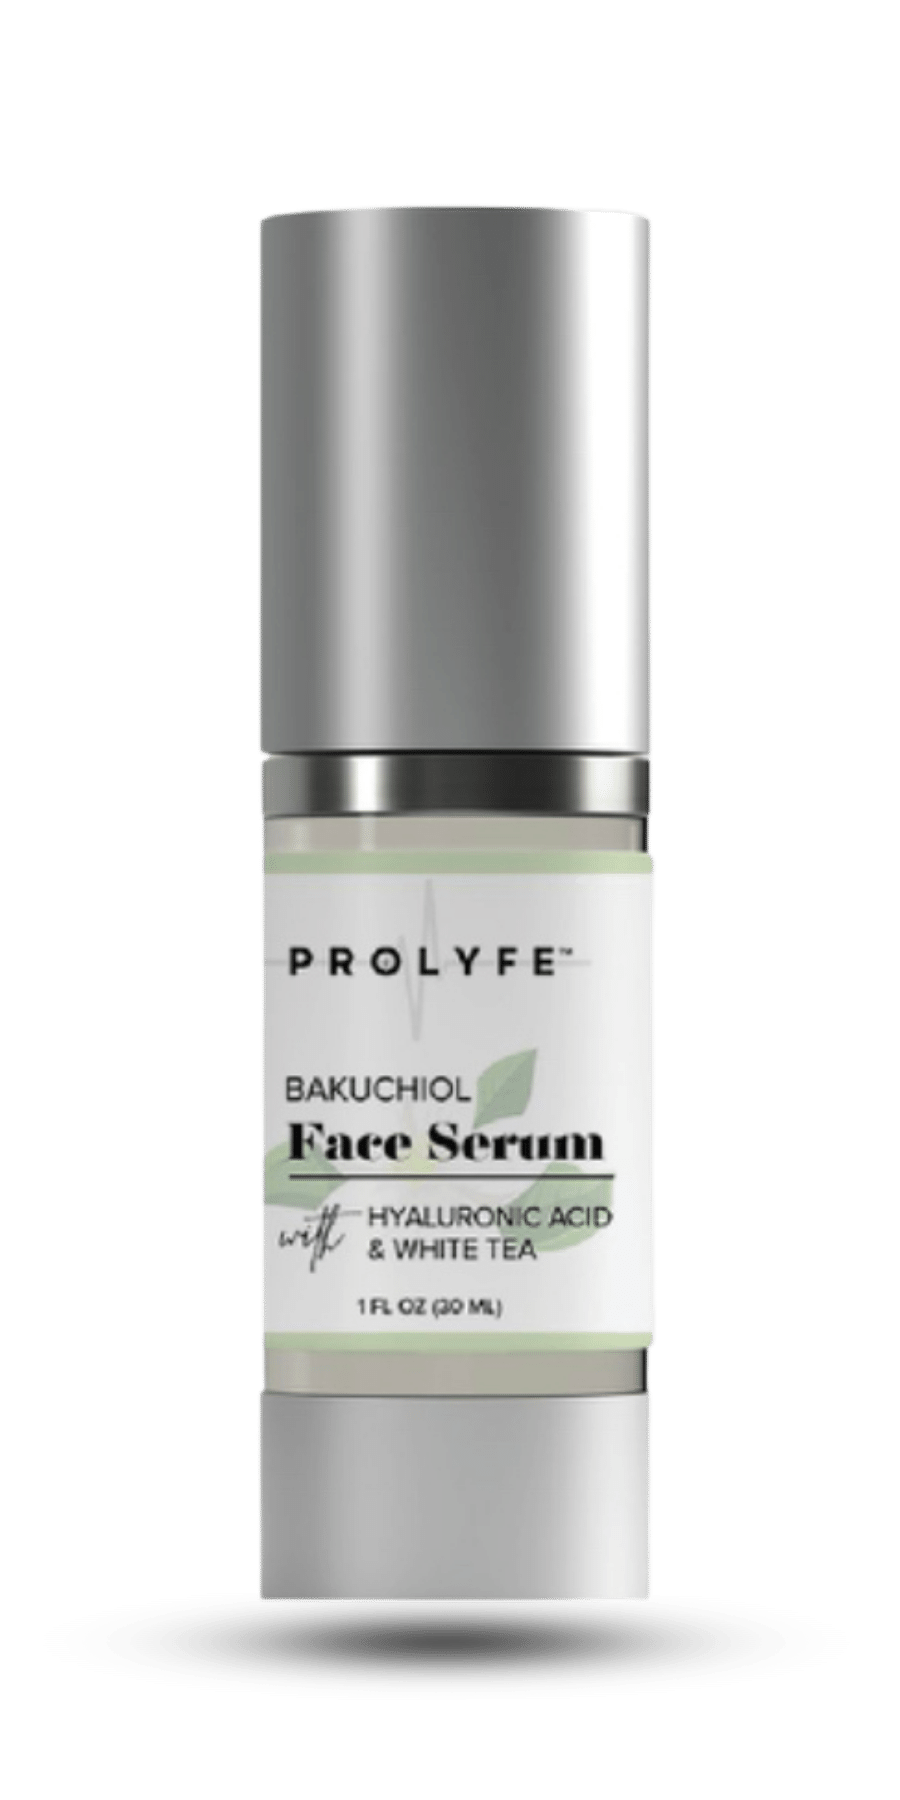 Prolyfe face serum skincare